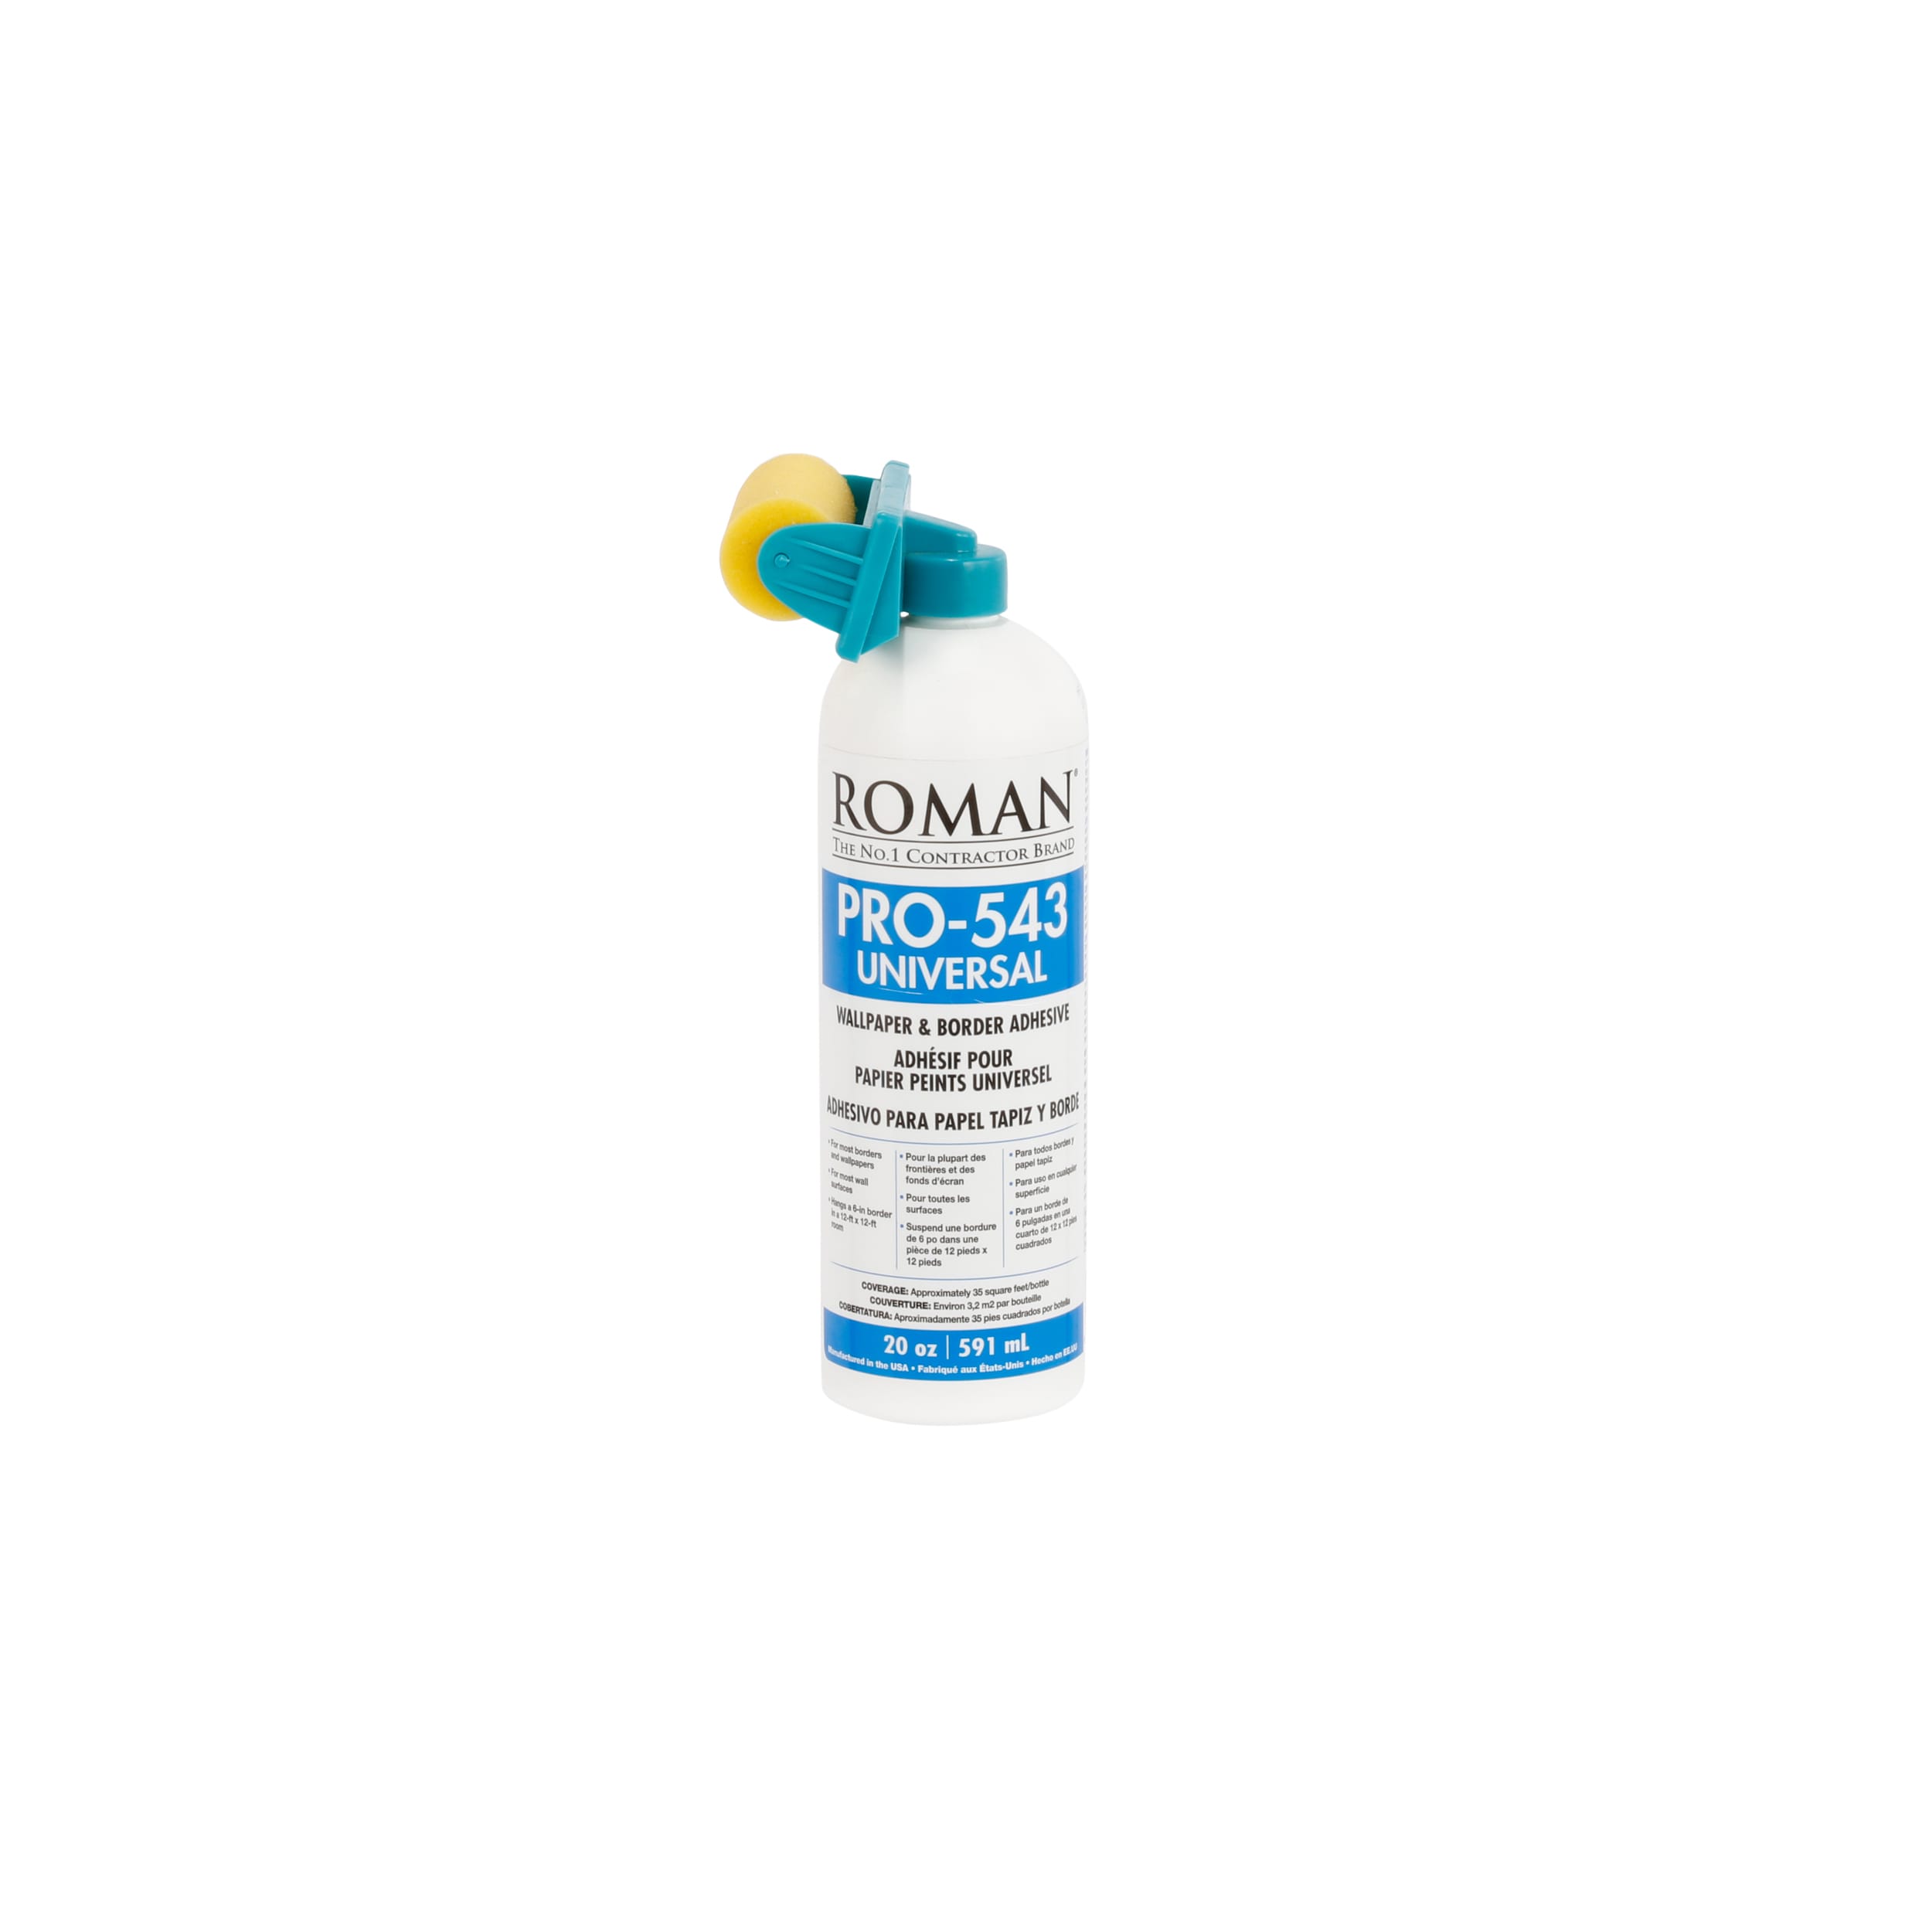 Roman PRO543 Universal Adhesive 20oz Liquid Wallpaper Adhesive at Lowes com